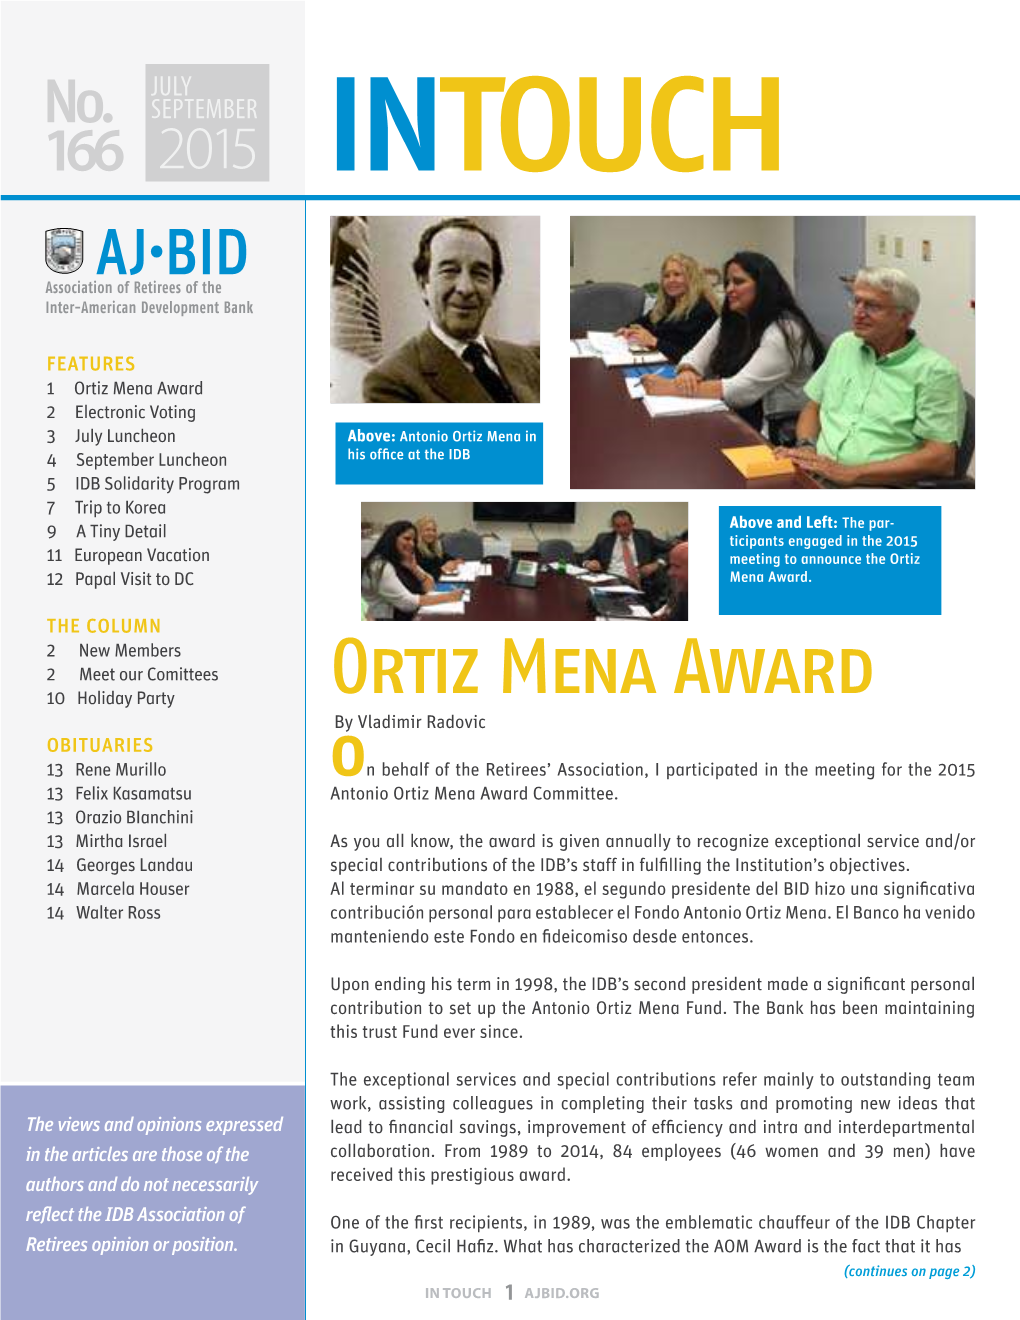 Ortiz Mena Award